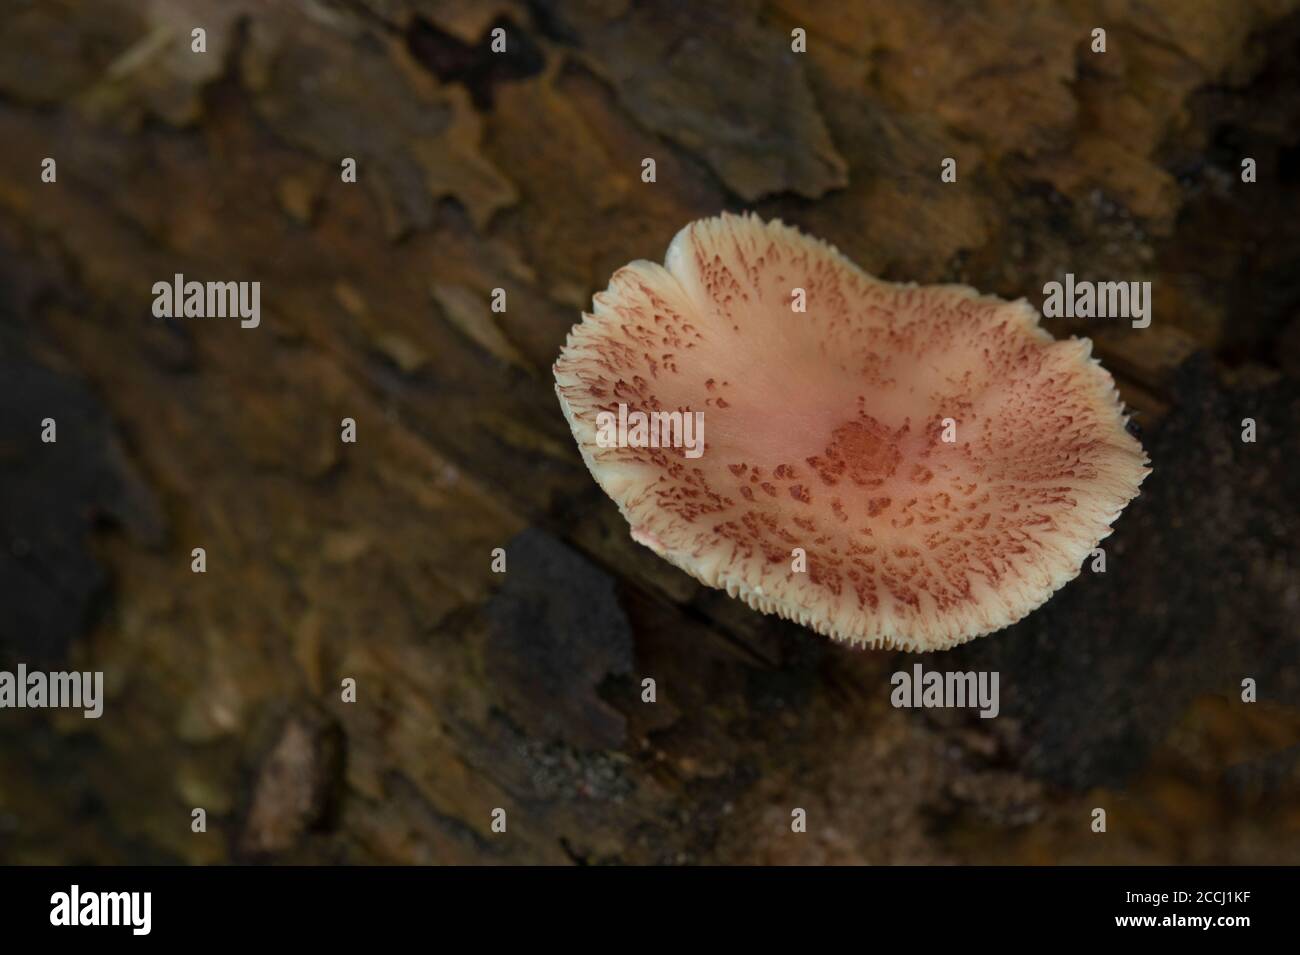 Brown mushroom on decayed wood. Stock Photo